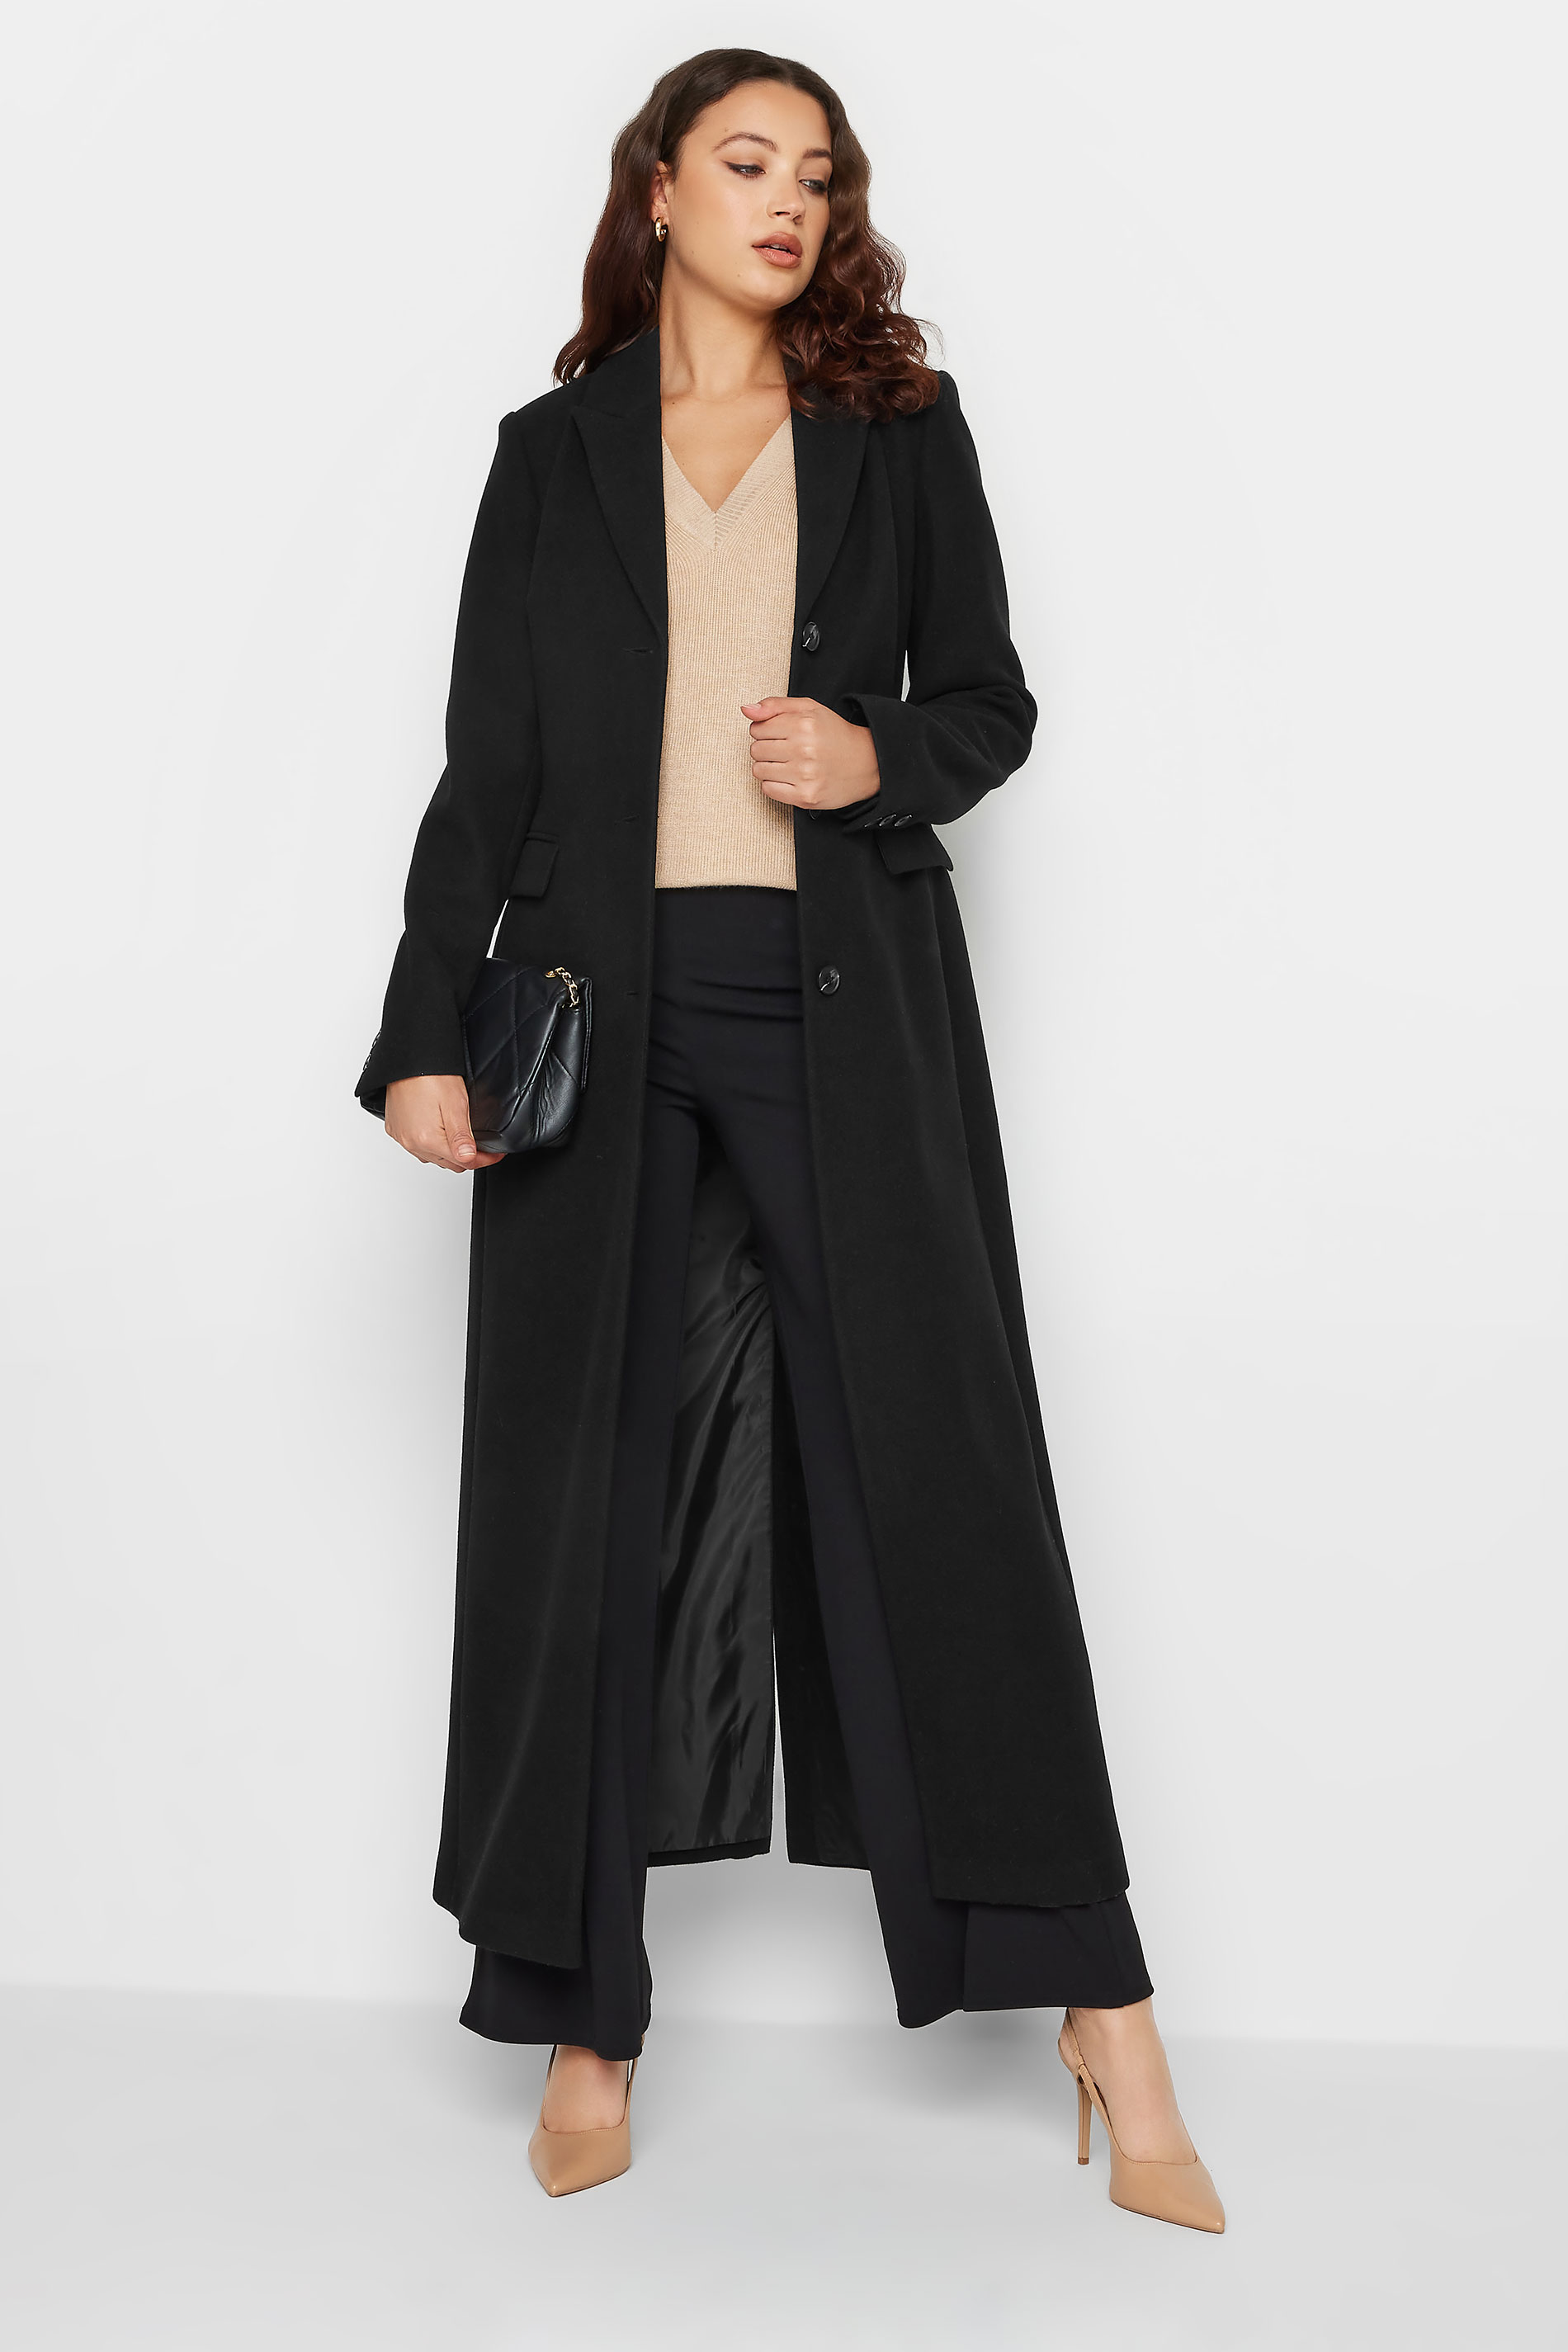 Tall Women's LTS Black Long Formal Coat | Long Tall Sally 2